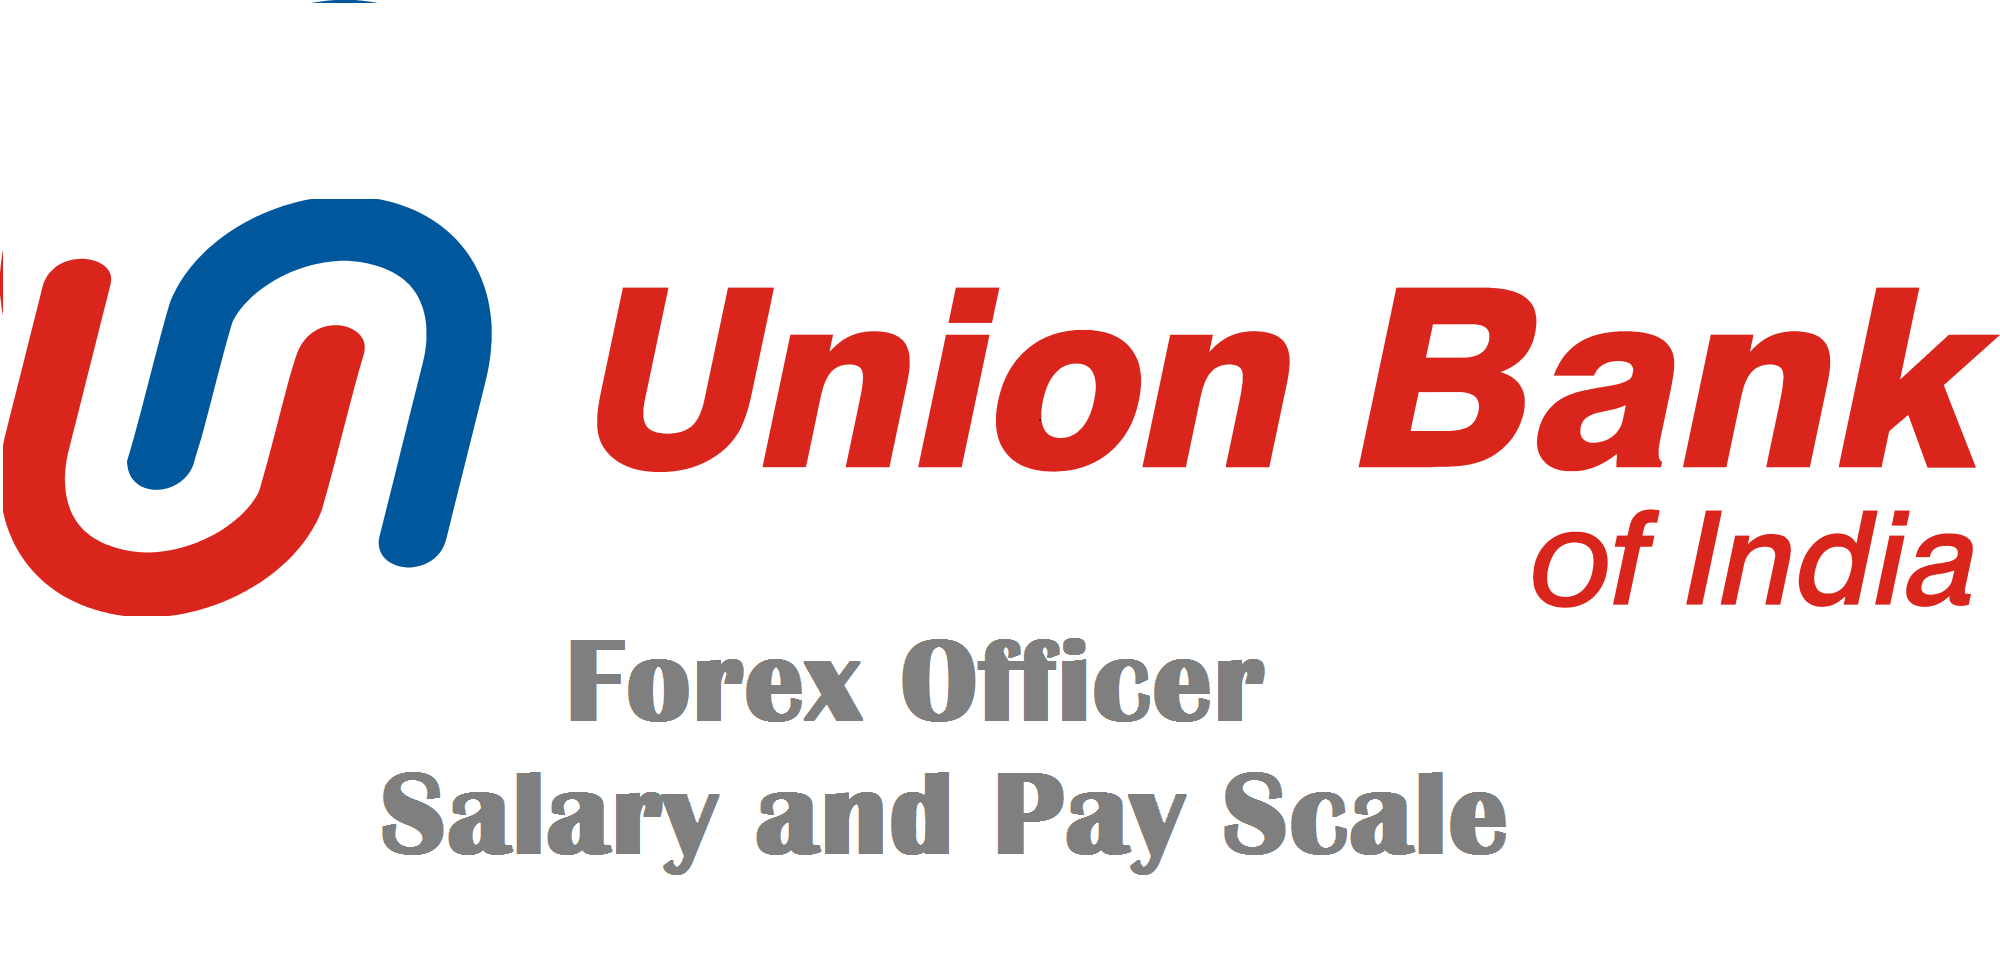 Union bank forex